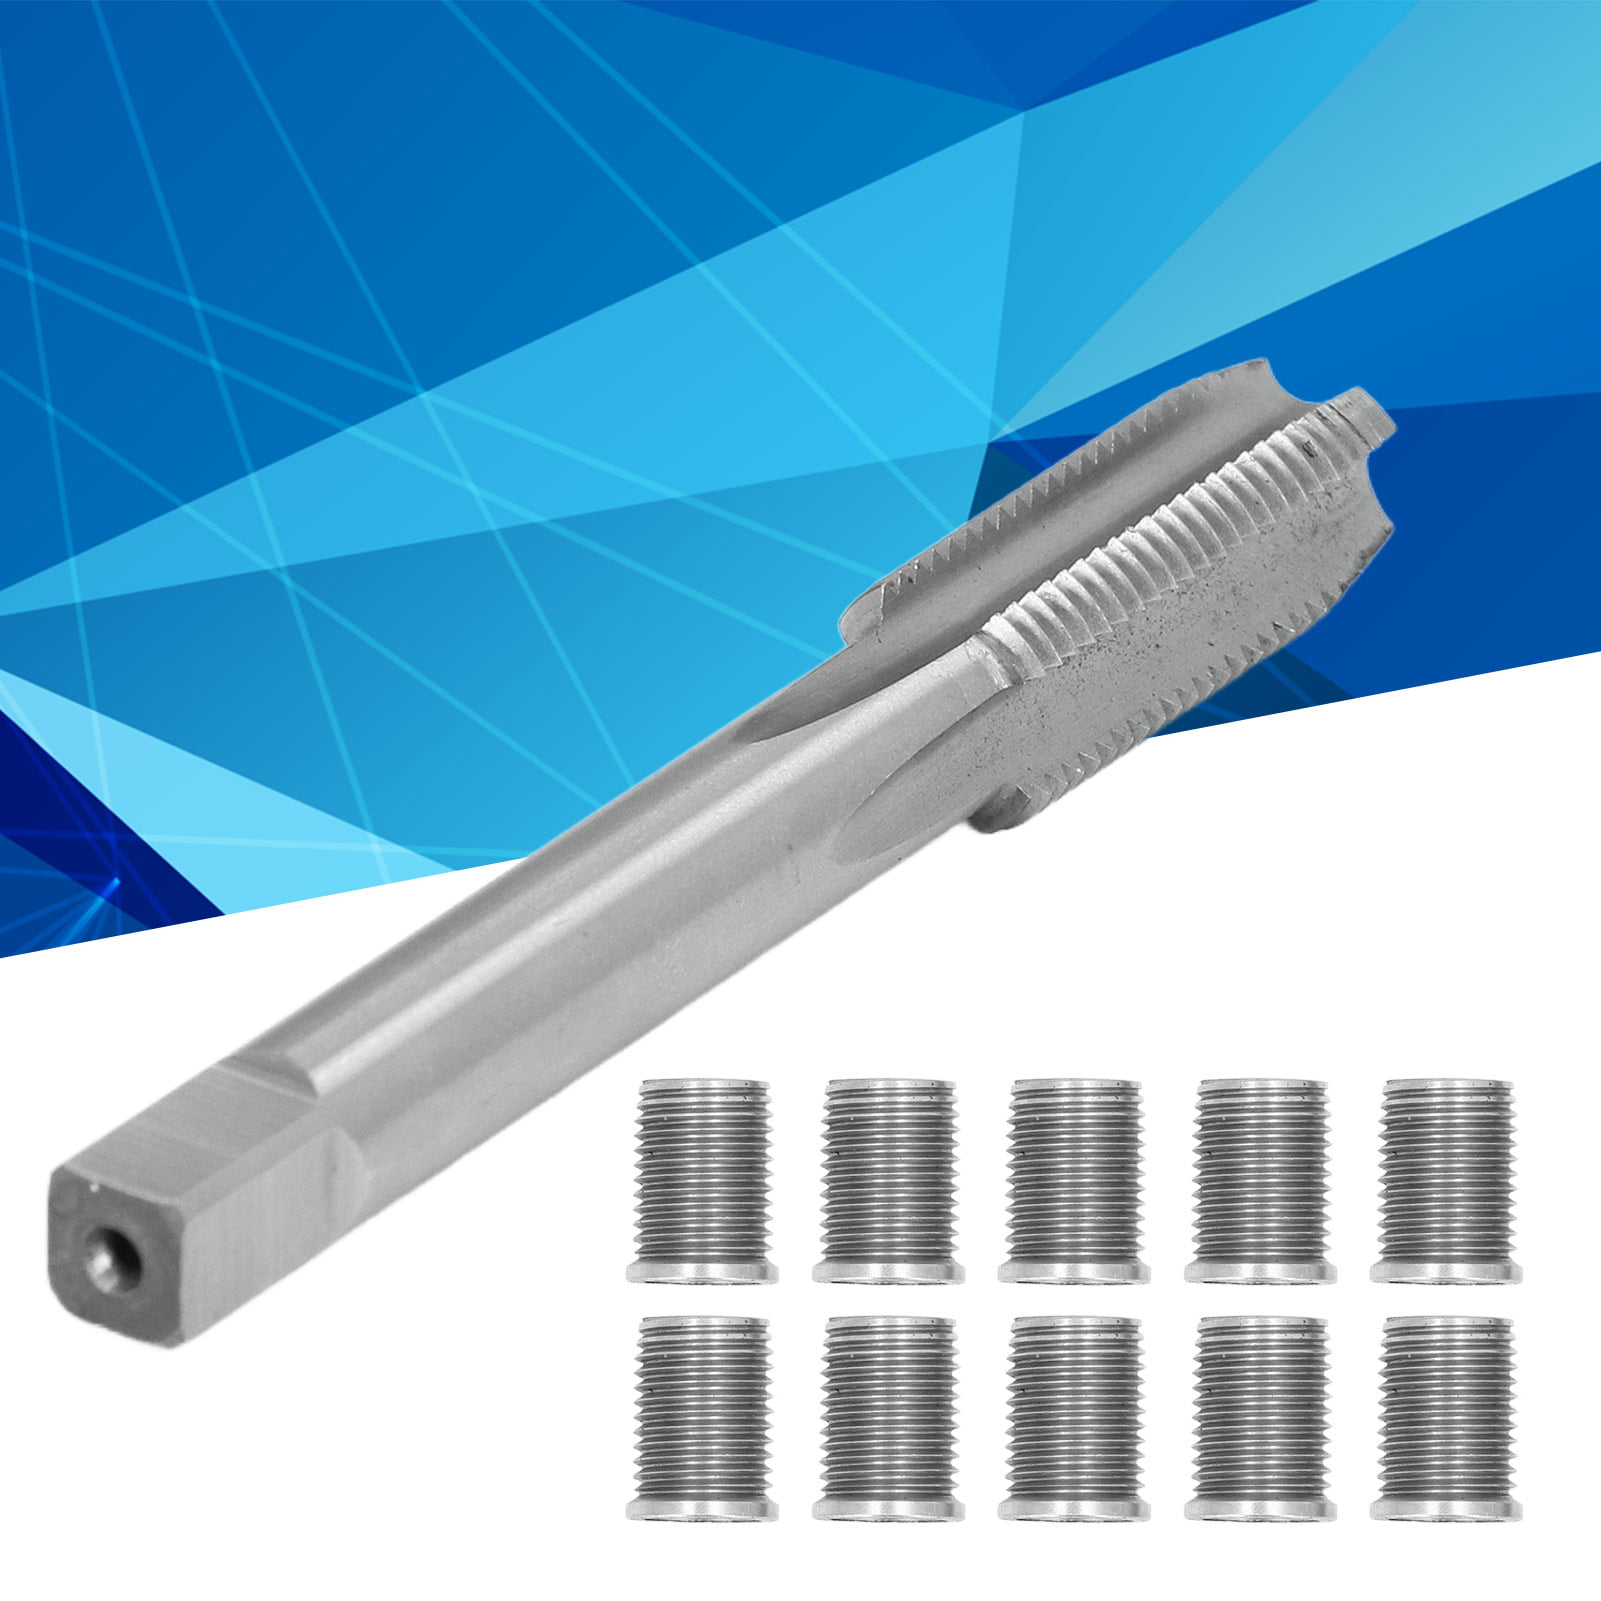 Stainless steel Spark Plug Thread Repair Tool M12x1.25 Tap Auto Accessories Hardware Kit M10x1.25 Bolt 